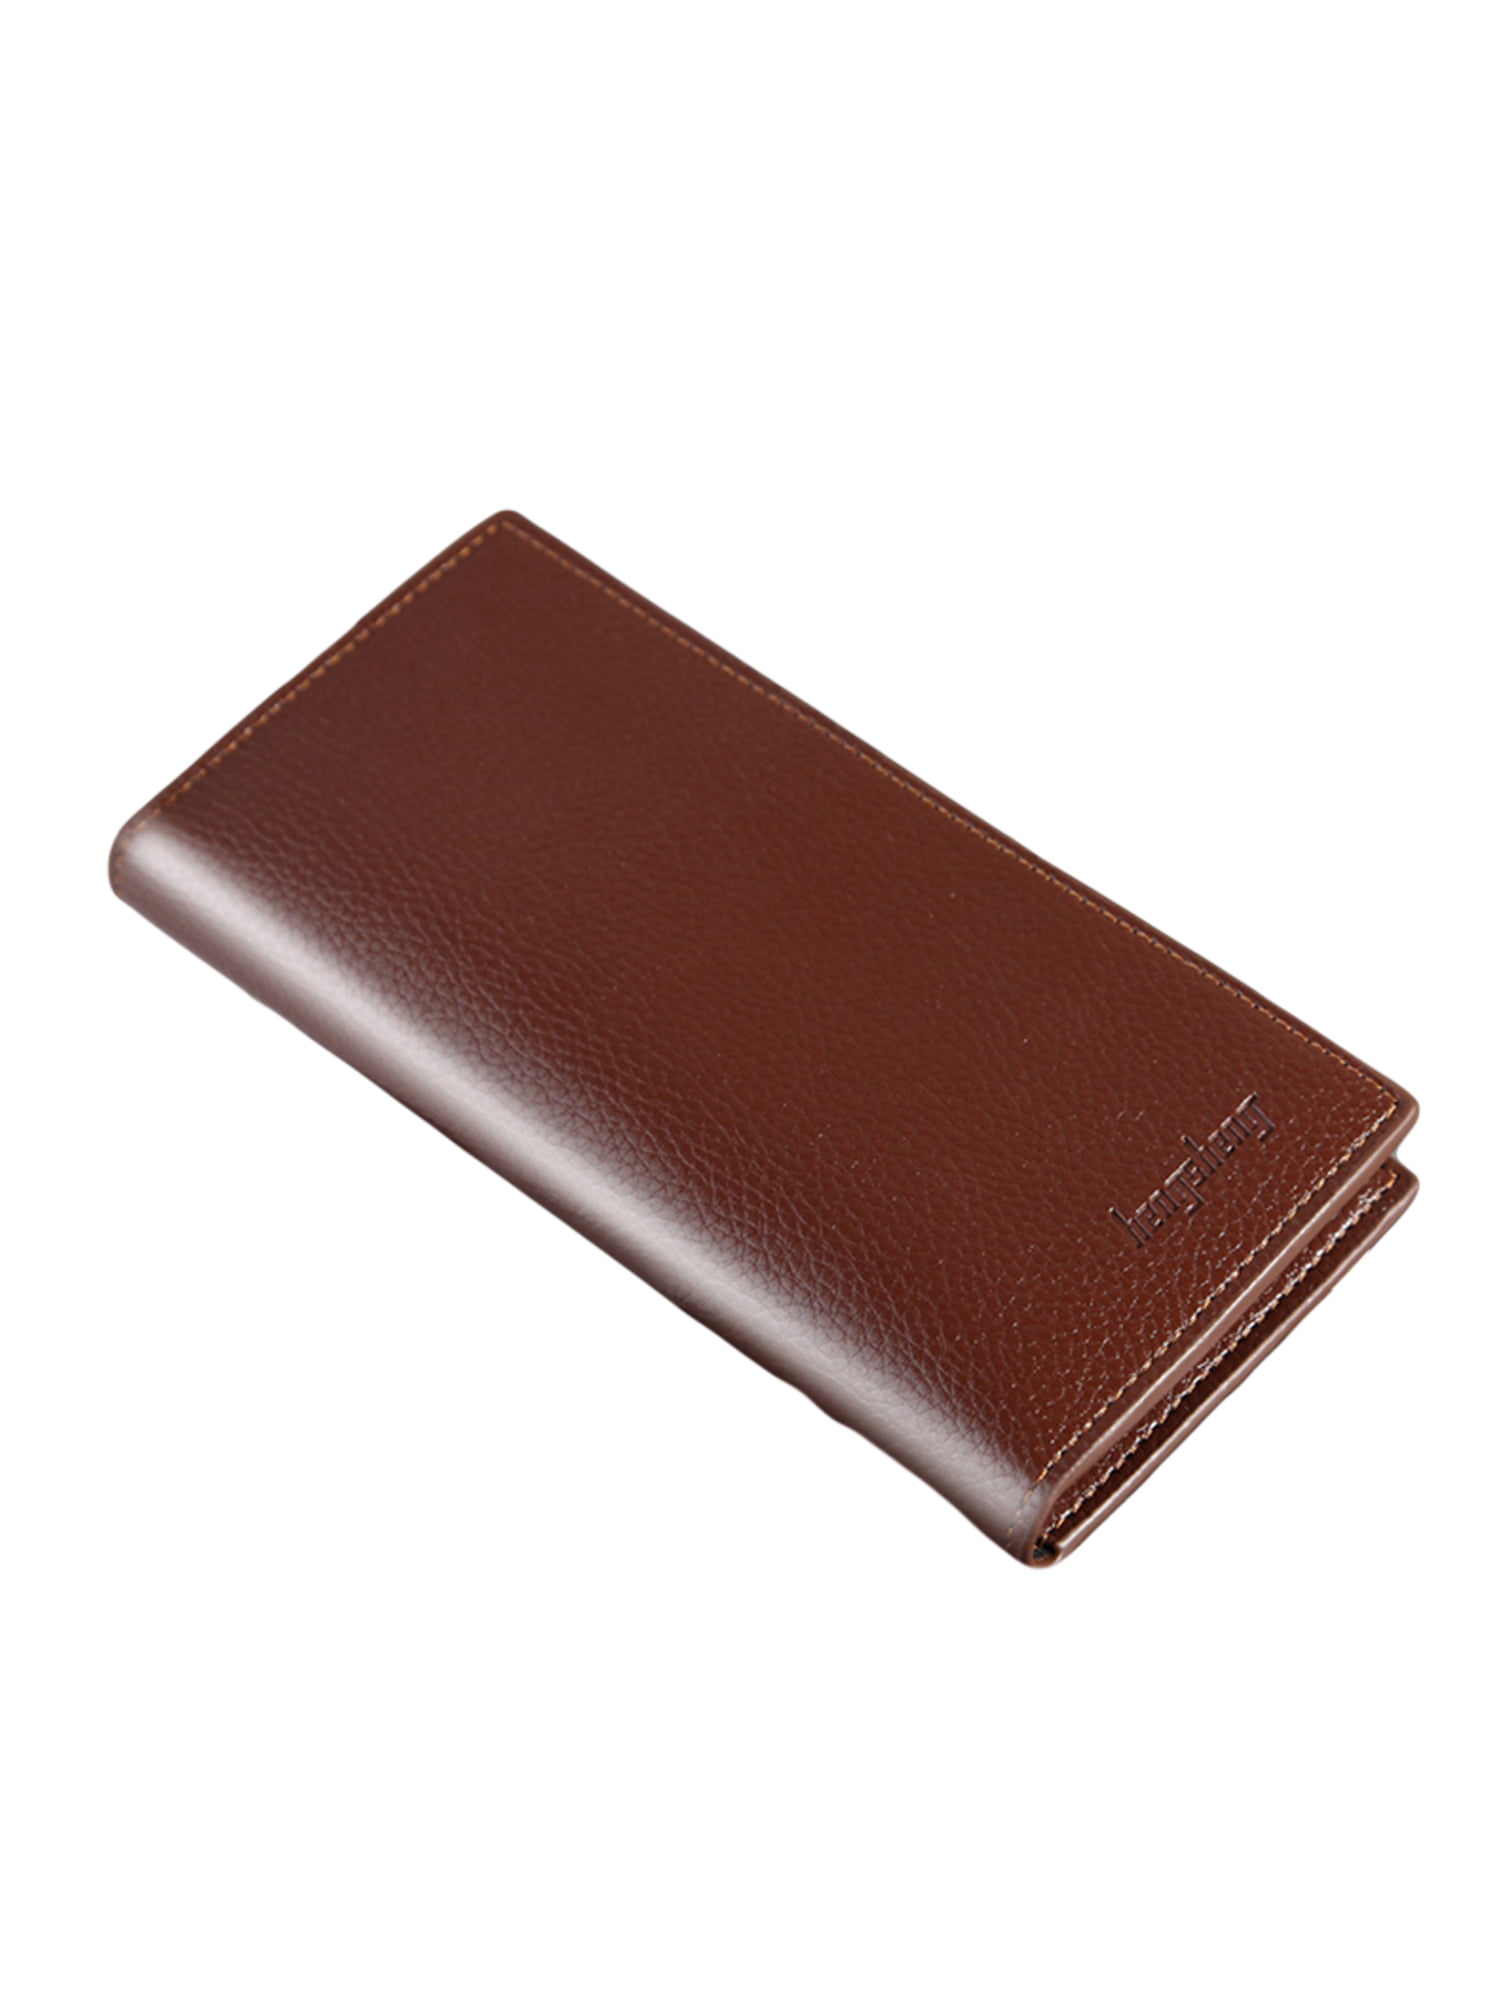 New Design Men's Bi-fold Leather Wallet ID/Credit Card Holder Money Purse 